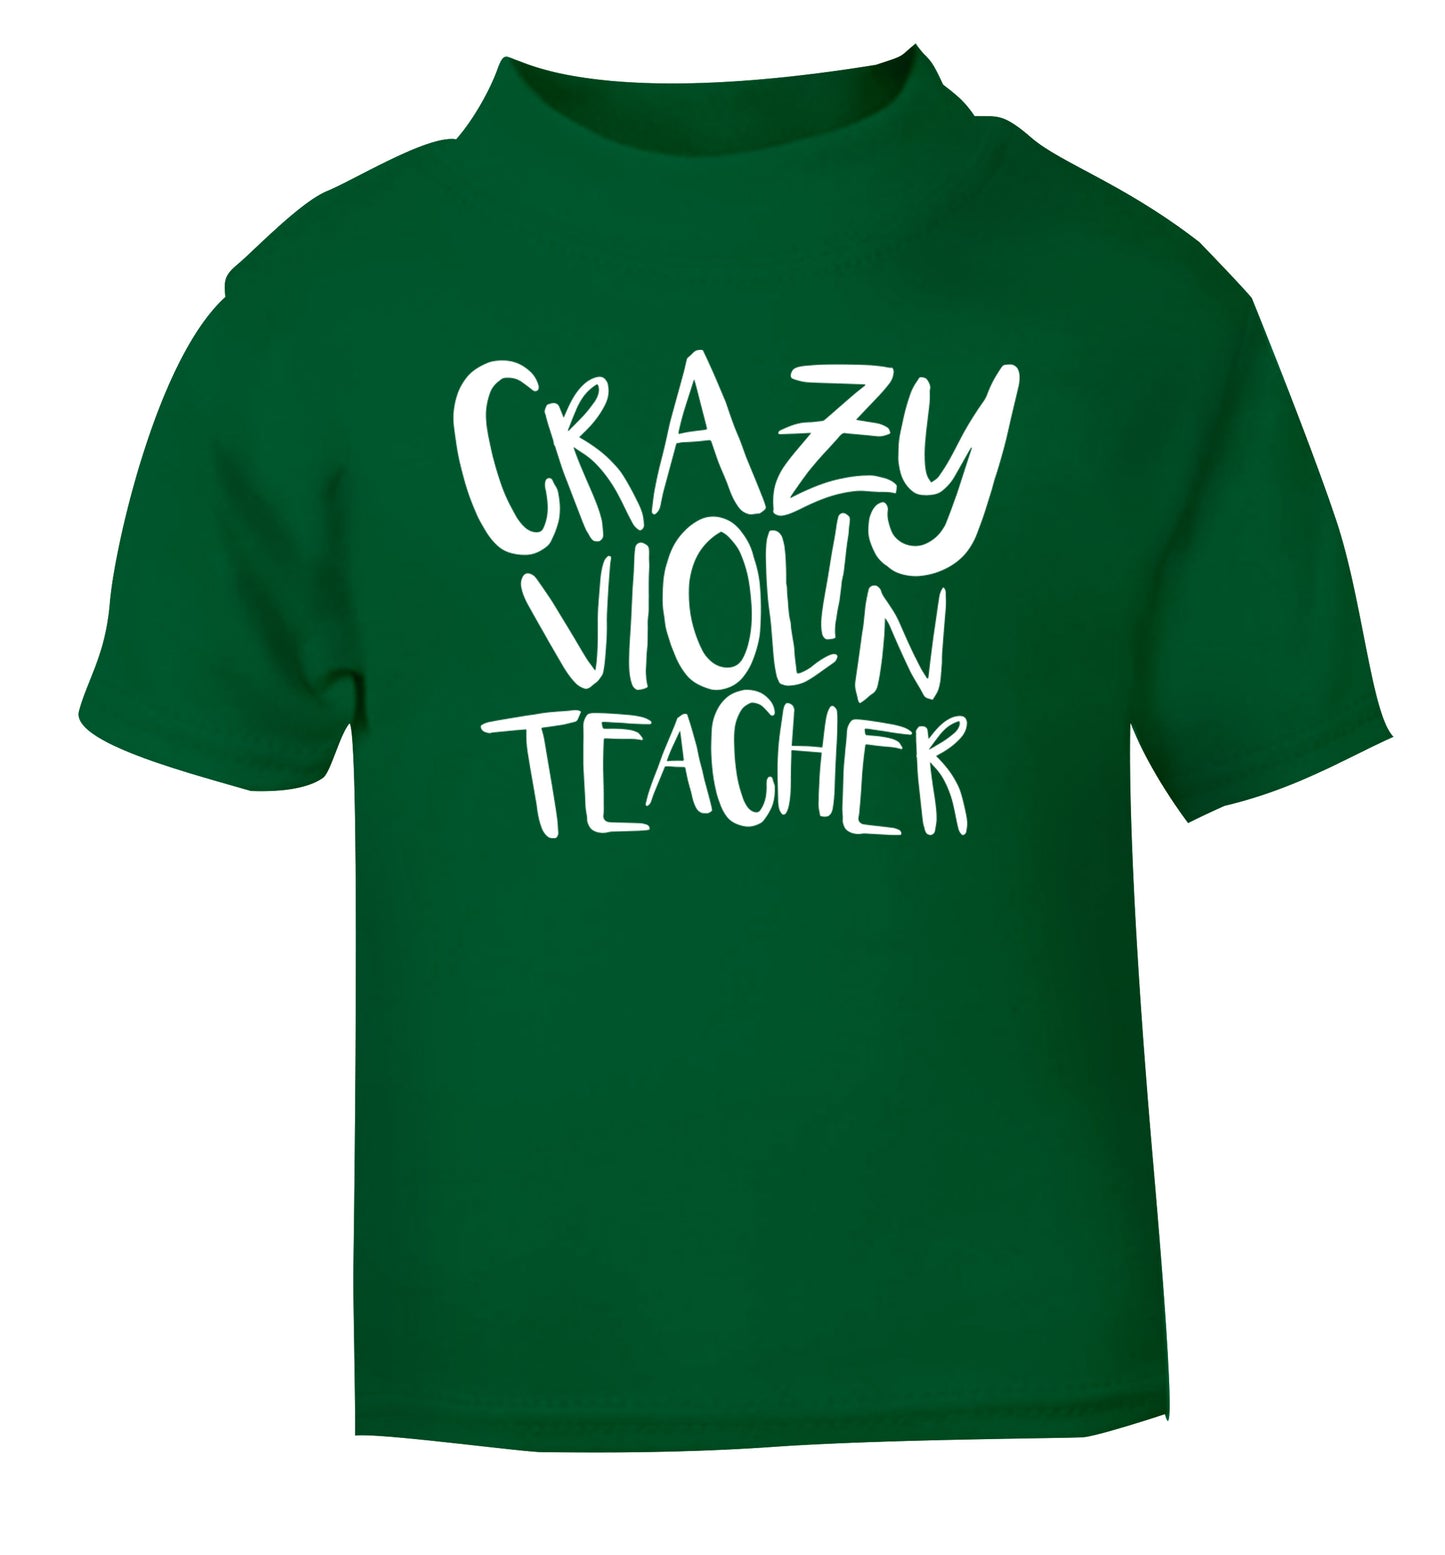 Crazy violin teacher green Baby Toddler Tshirt 2 Years